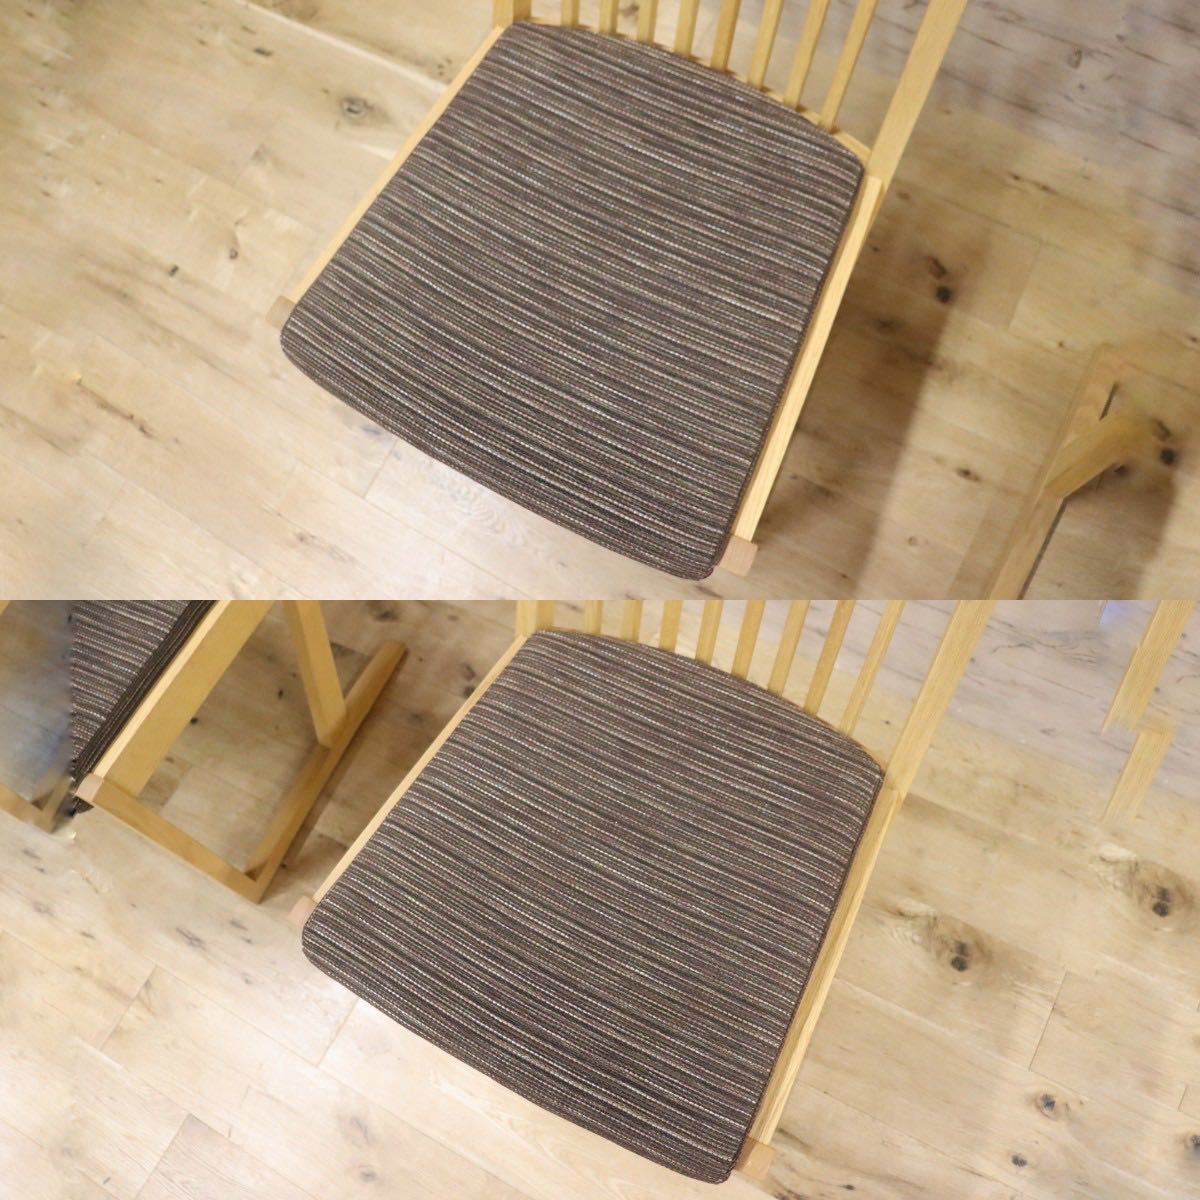 GMGN199B○柏木工 / KASHIWA ダイニングチェア サイドチェア 椅子 2脚セット 木製フレーム オーク材 ファブリック 定価約9万 展示品